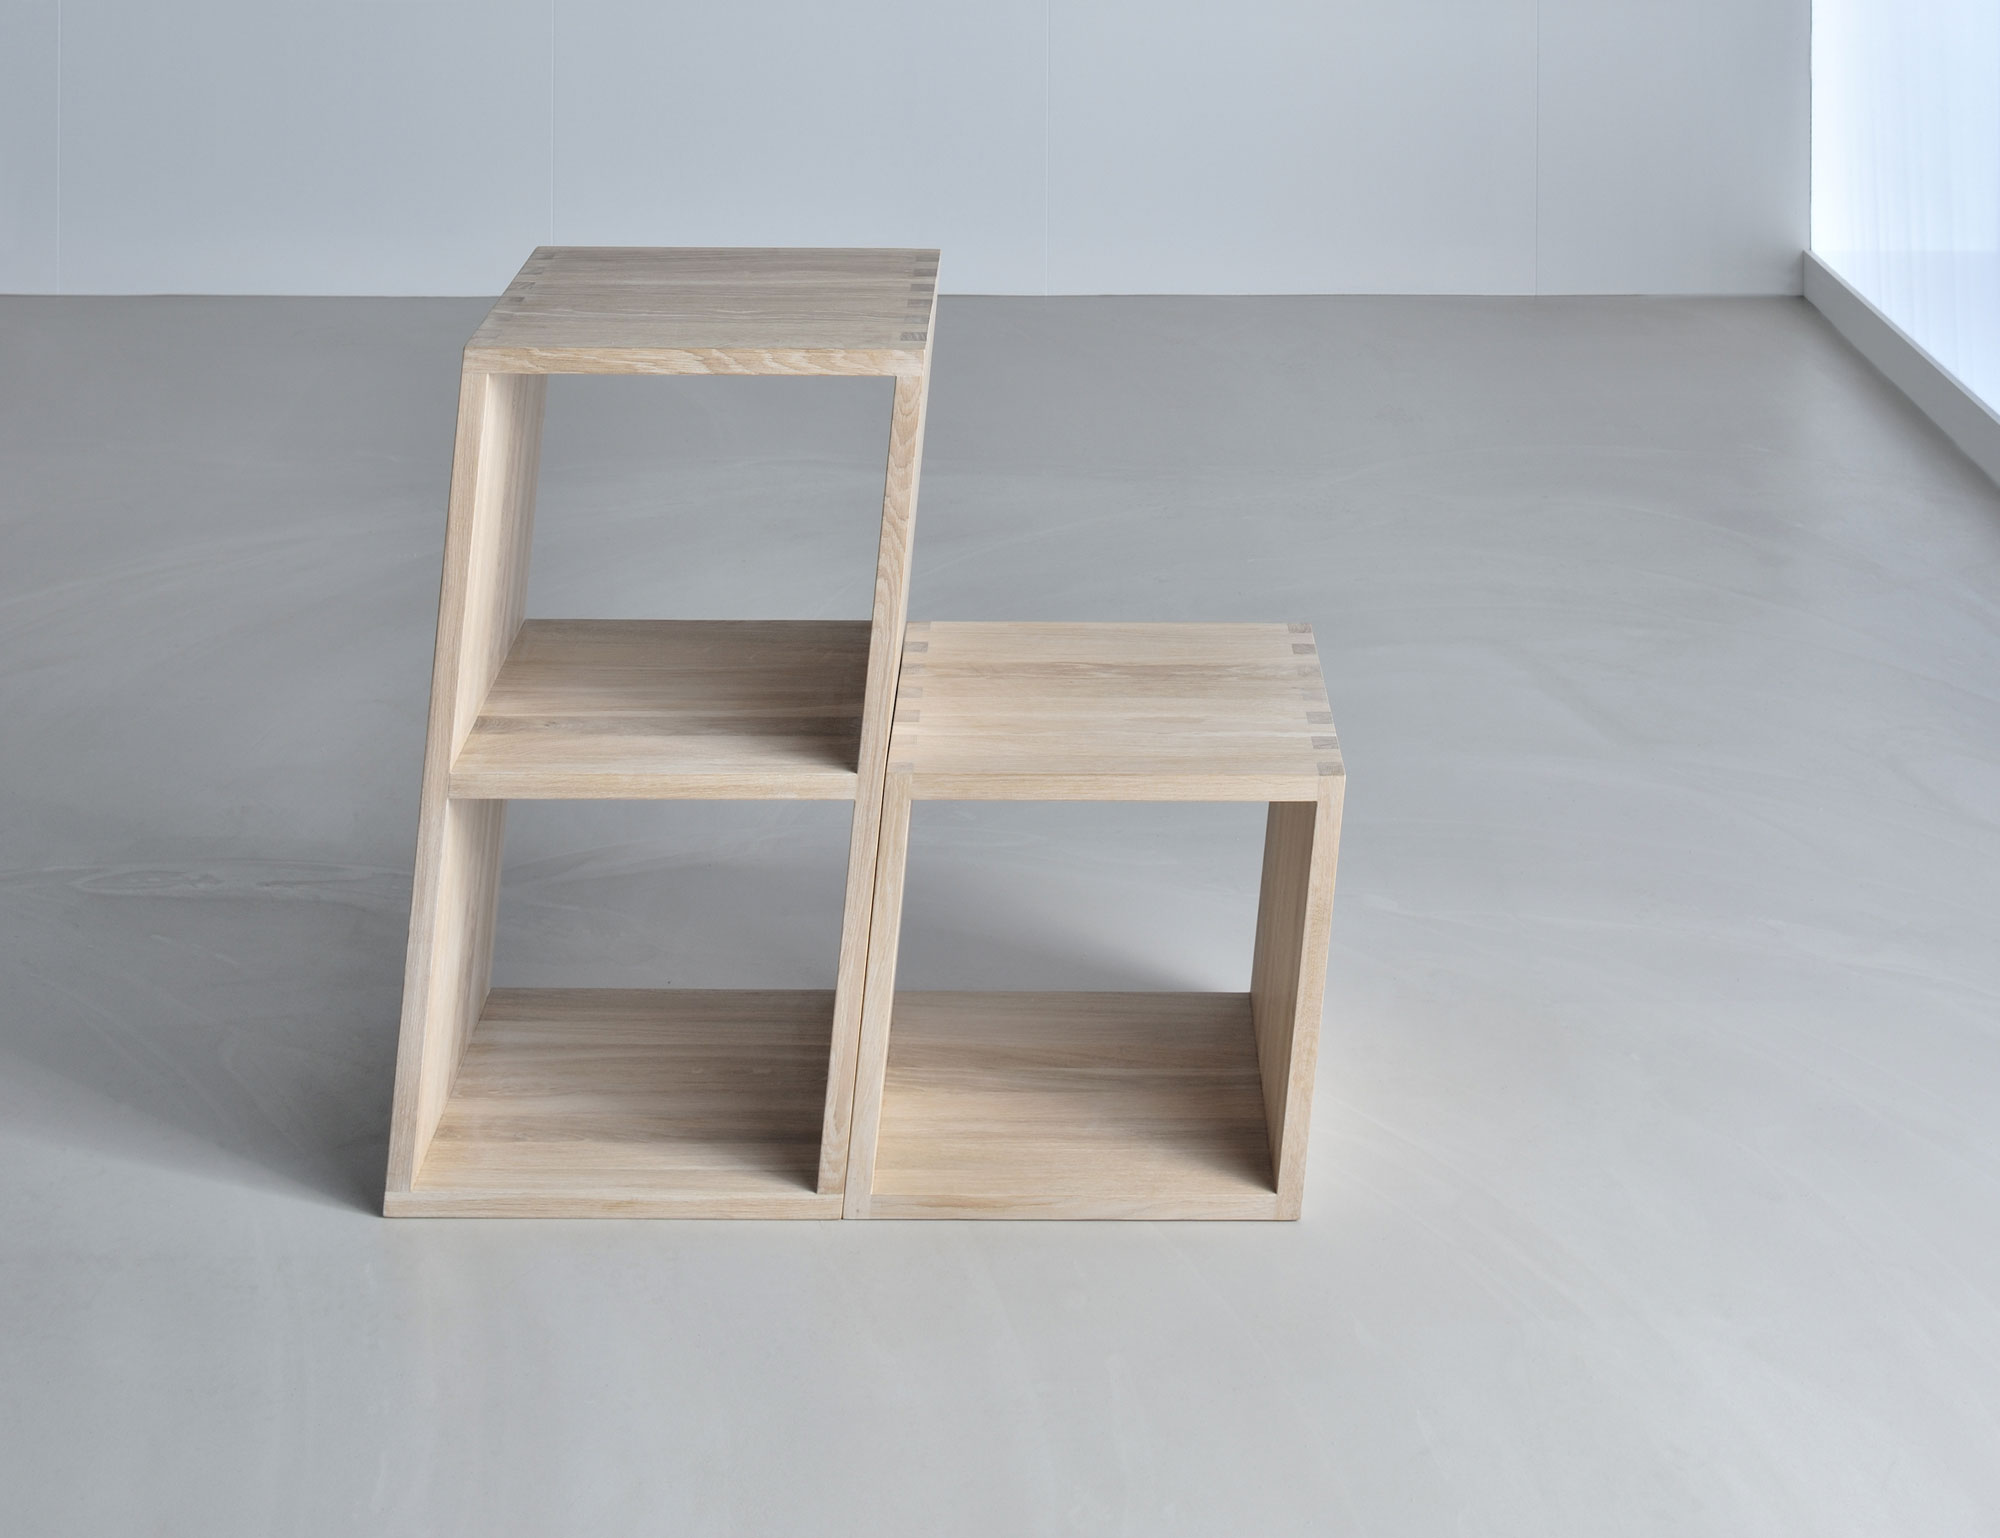 Wooden Designer Shelf PISA 3345 custom made in solid wood by vitamin design